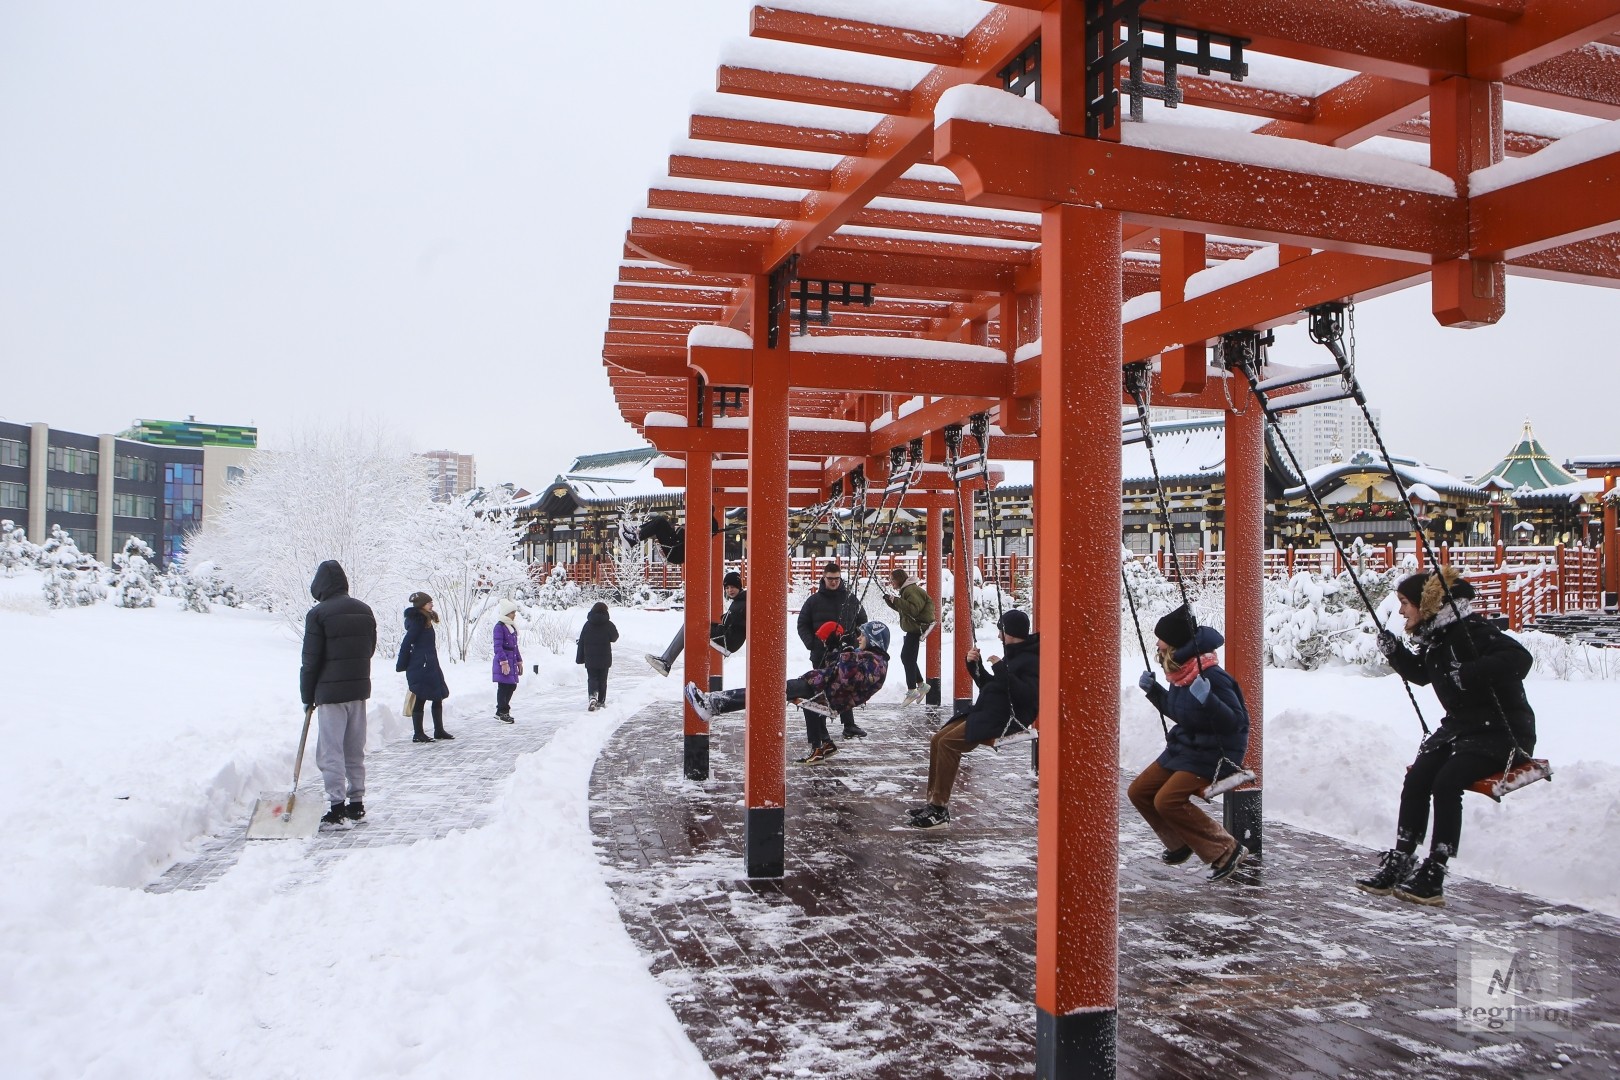 куркино японский парк зимой